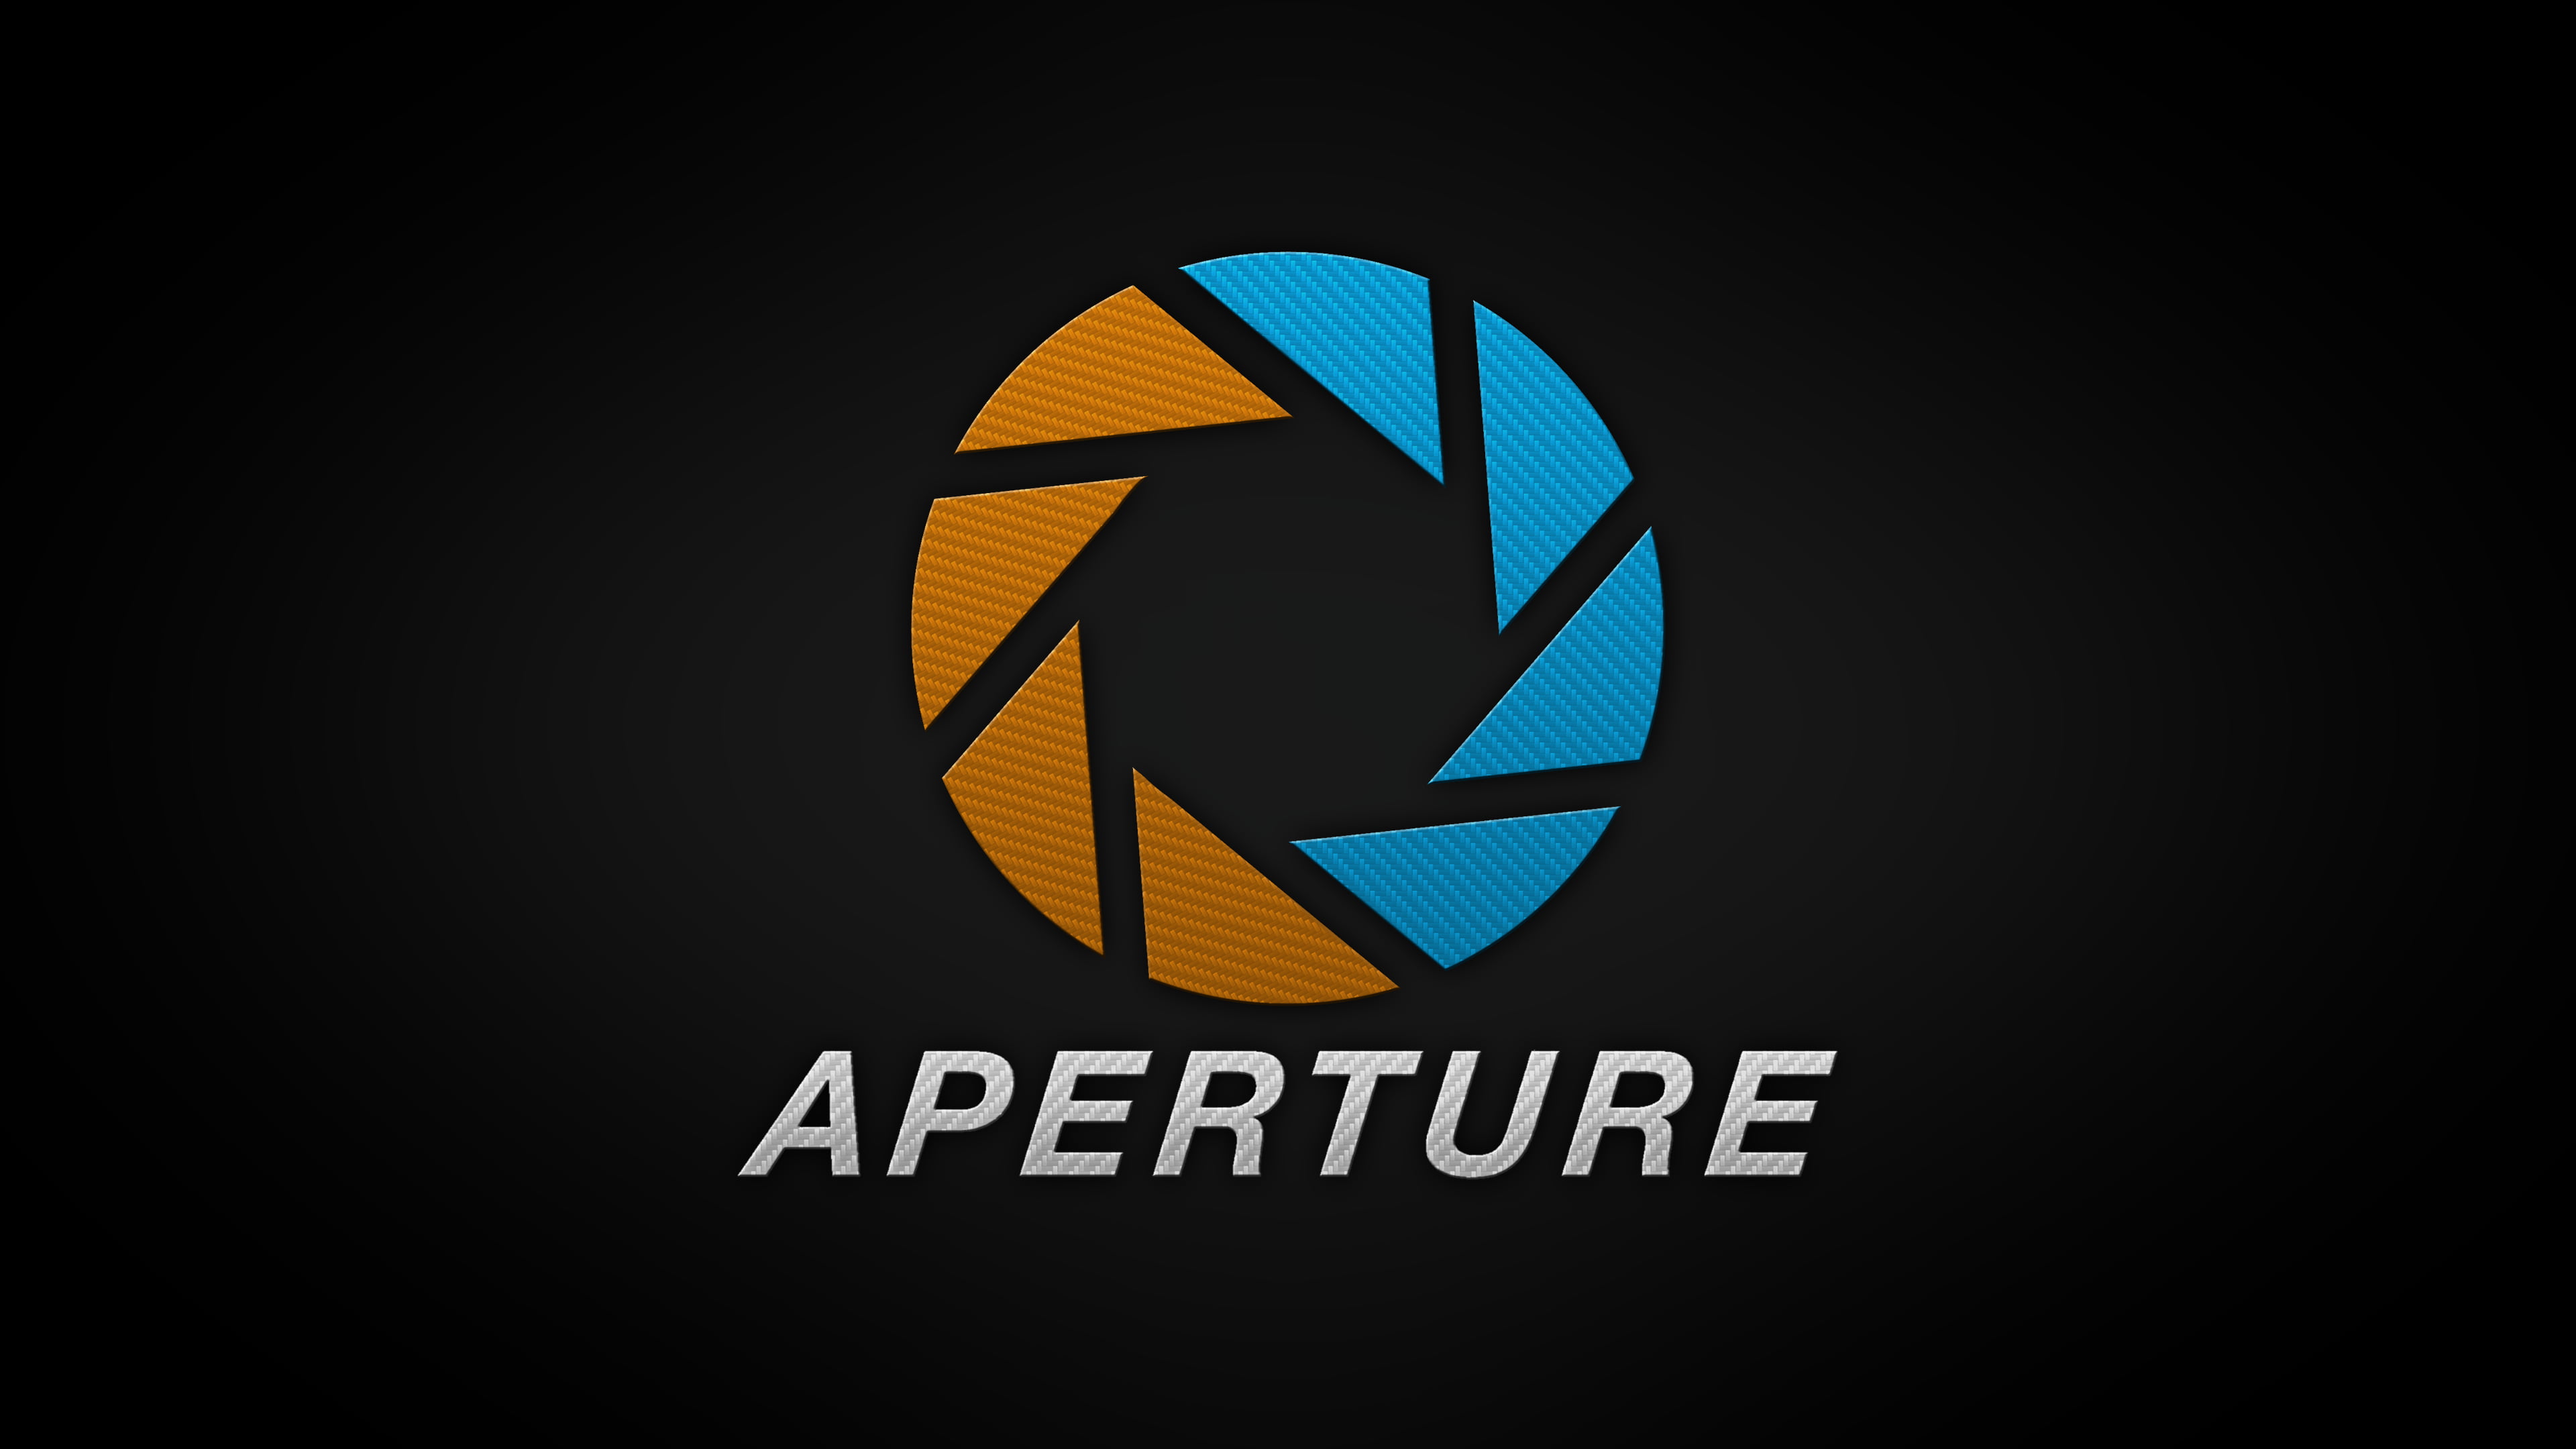 Aperture logo, Aperture Laboratories, fictional logo